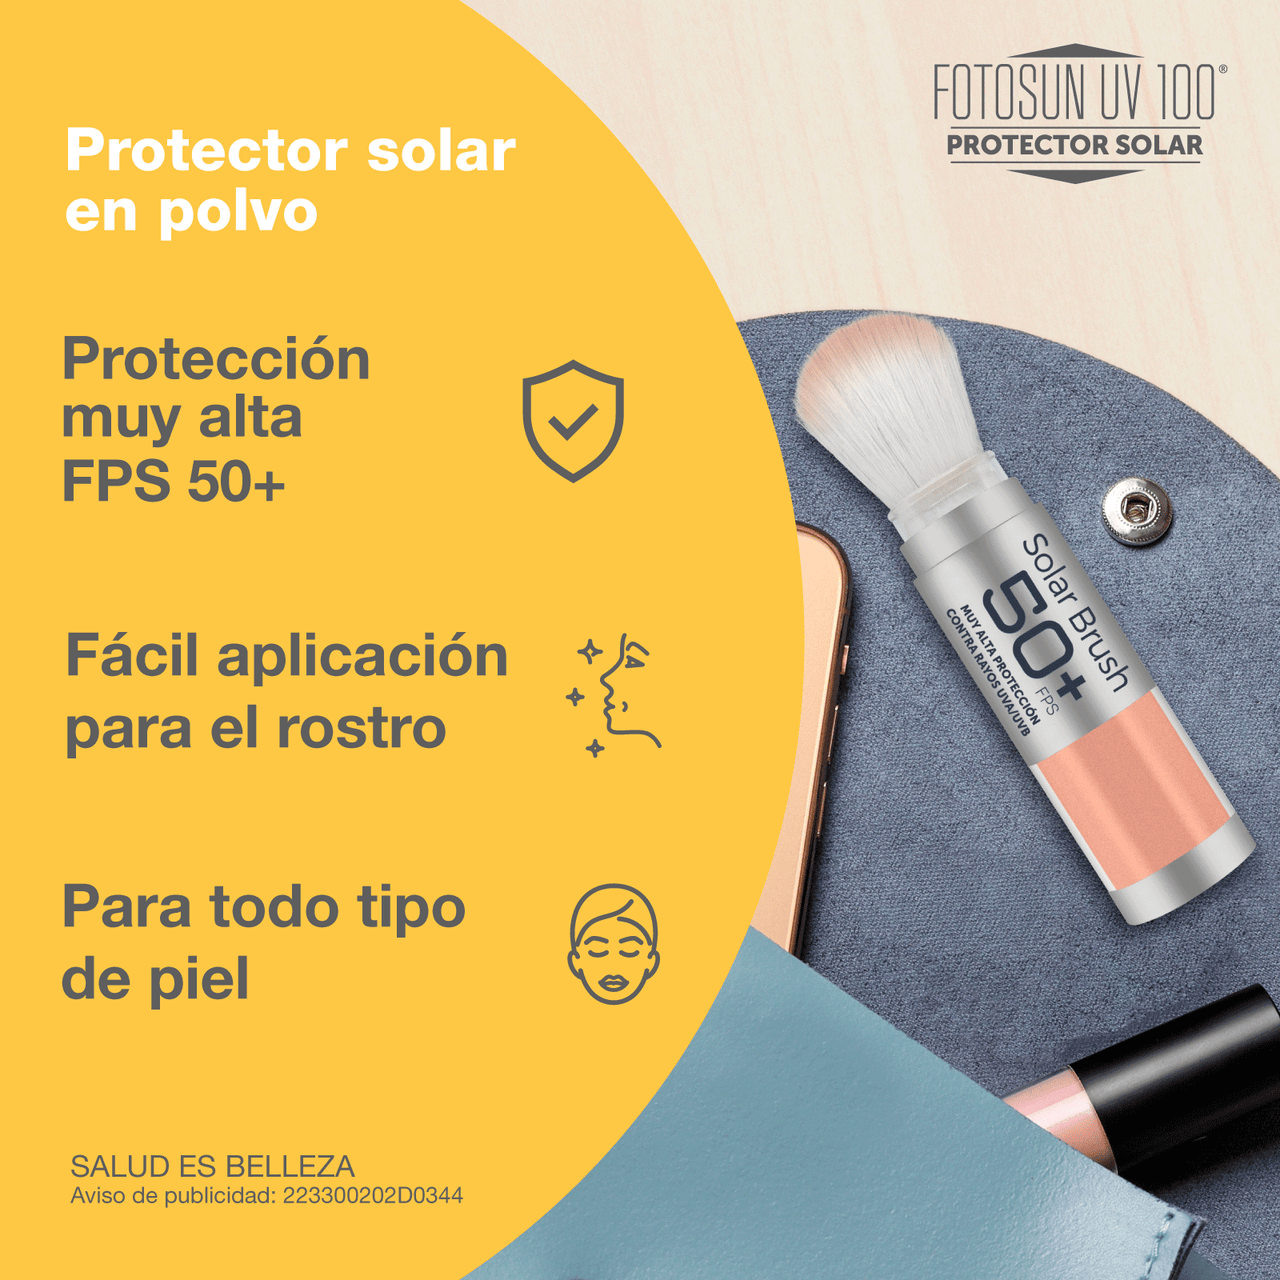 FOTOSUN UV 100 Protector Solar Brush en Polvo